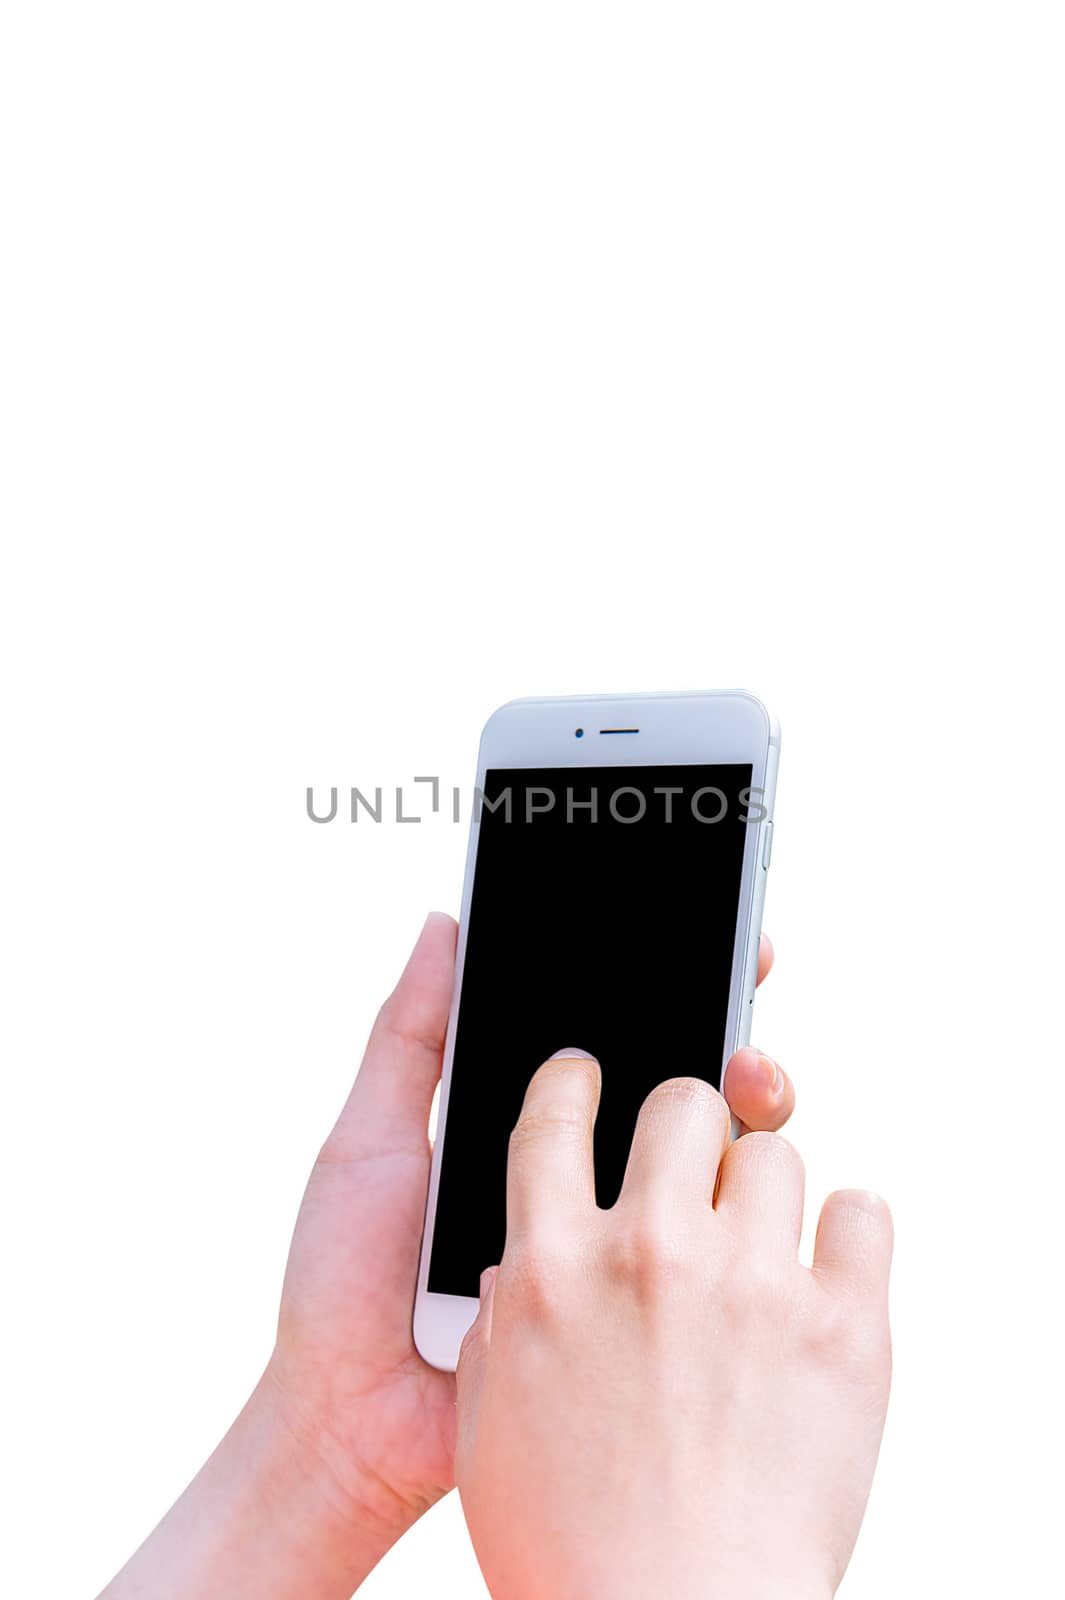 Hand holding smart phone isolated on white background.